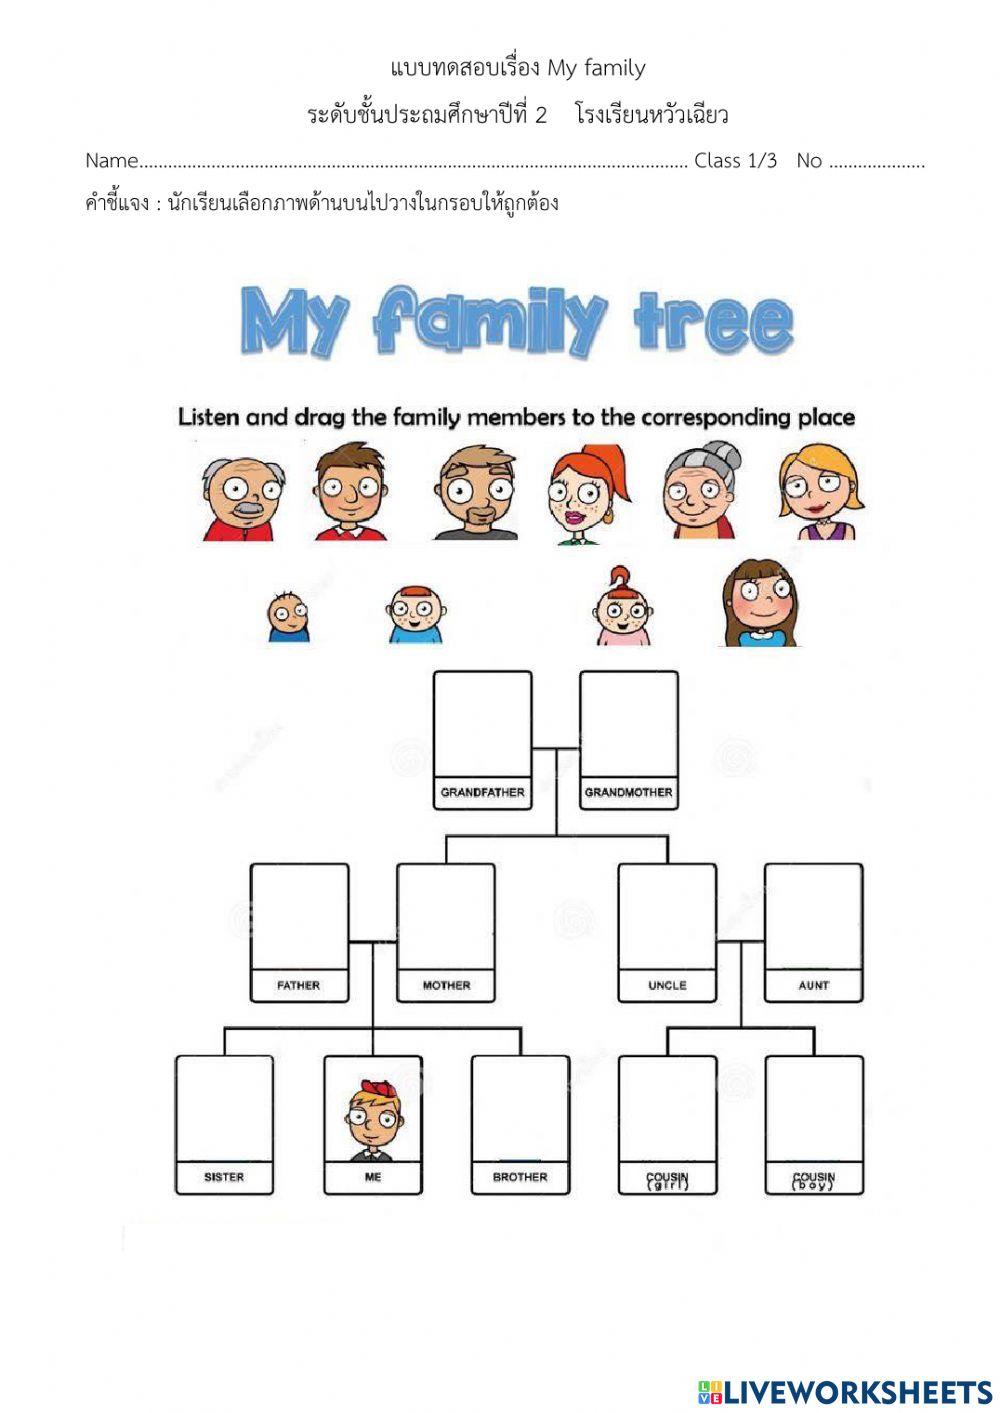 My family tree test